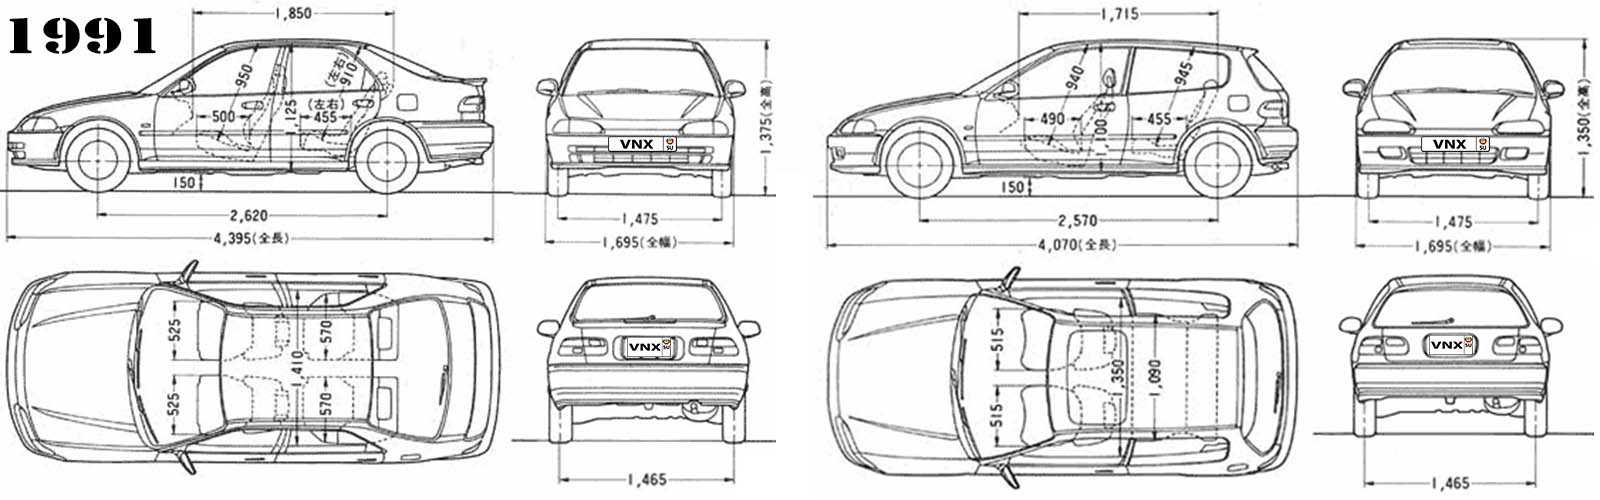 Габаритные размеры Хонда Сивик 1991 (dimensions Honda Civic RTSi/Sir)